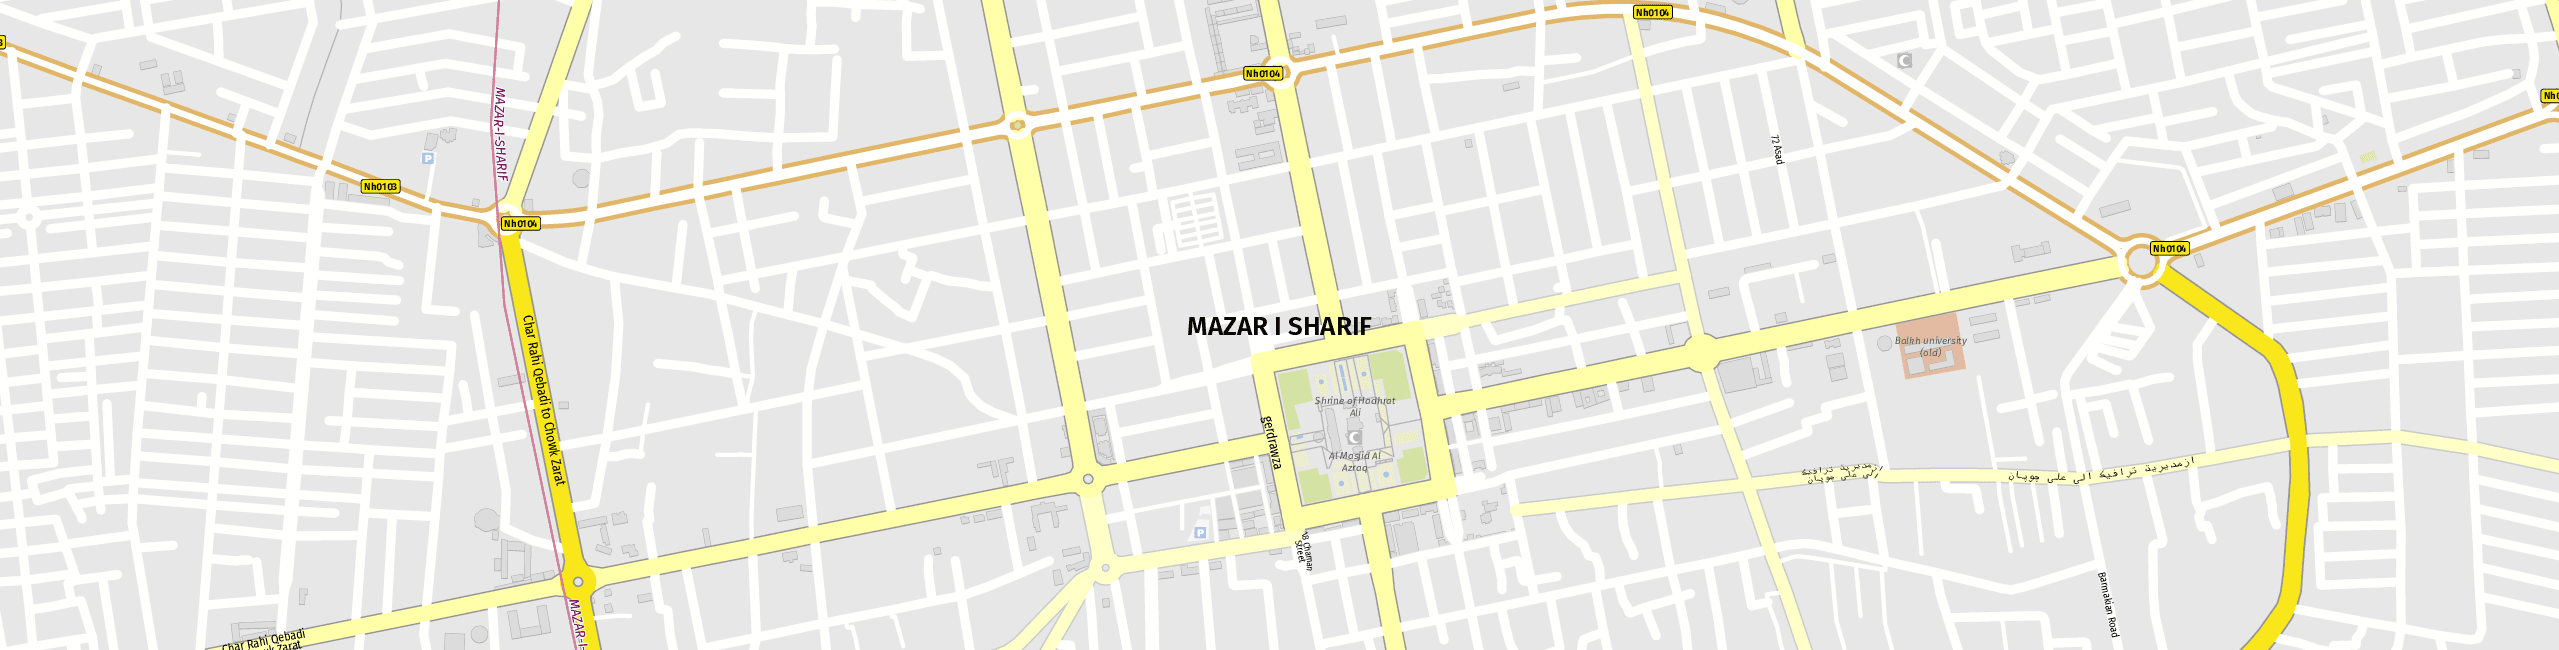 Stadtplan Mazari Sharif zum Downloaden.